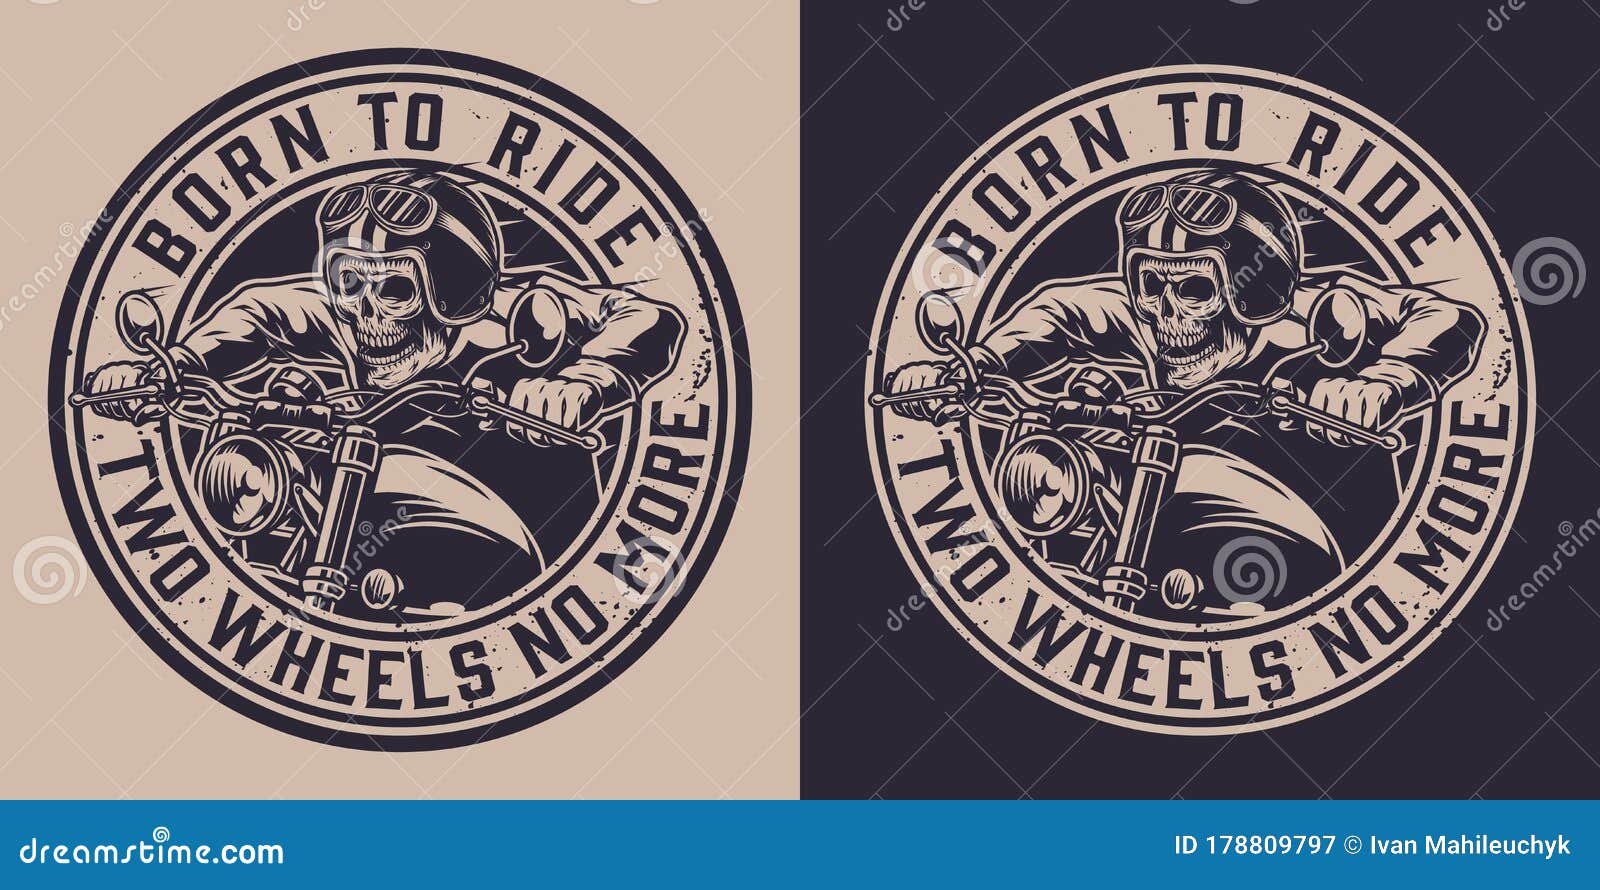 motorcycle vintage round emblem